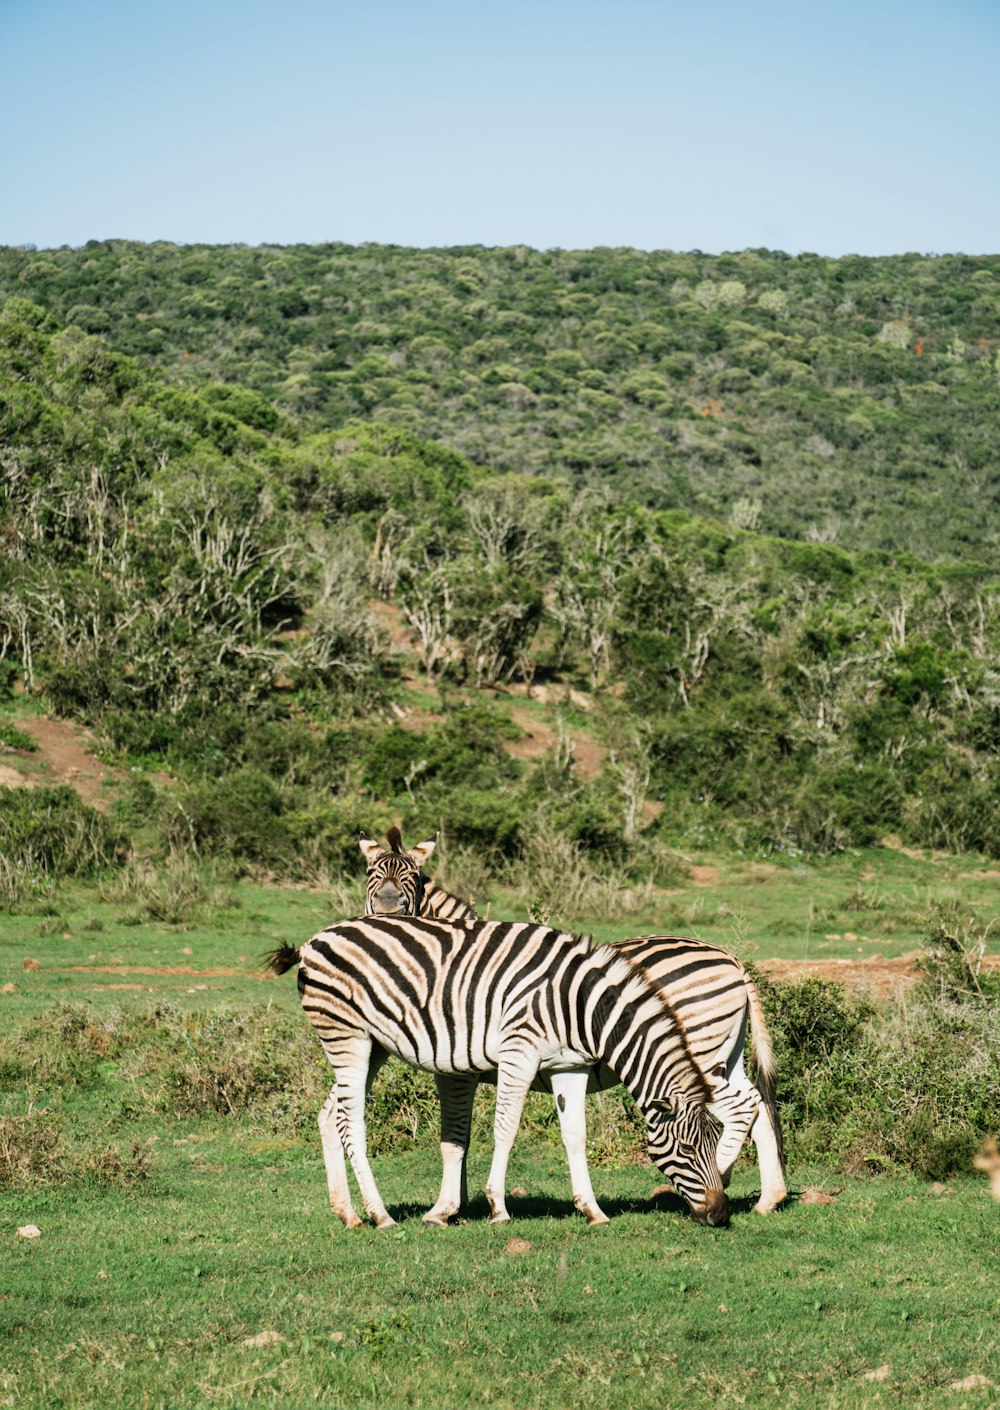 zebras grazing in the grass